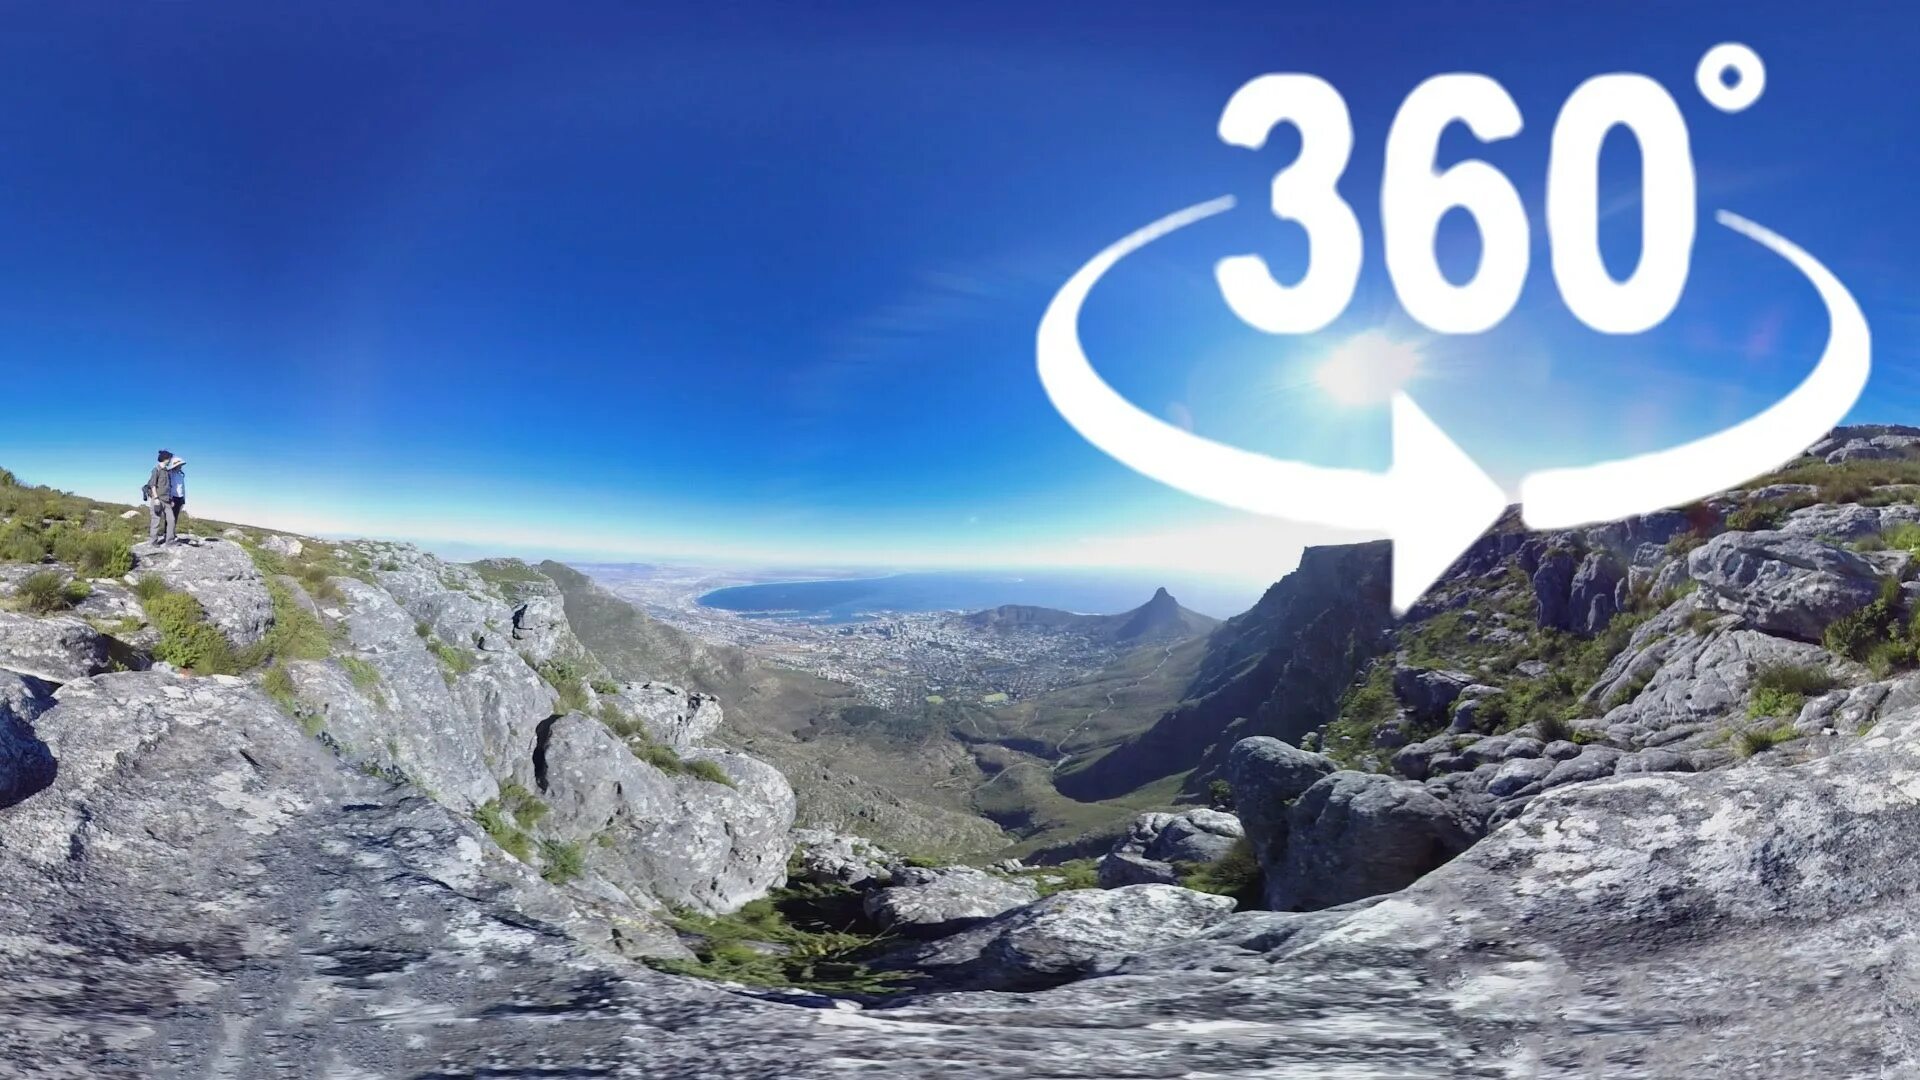 360 video. Картинка 360 градусов. Видео 360 градусов. Панорамное видео. Видео 360 градусов youtube.